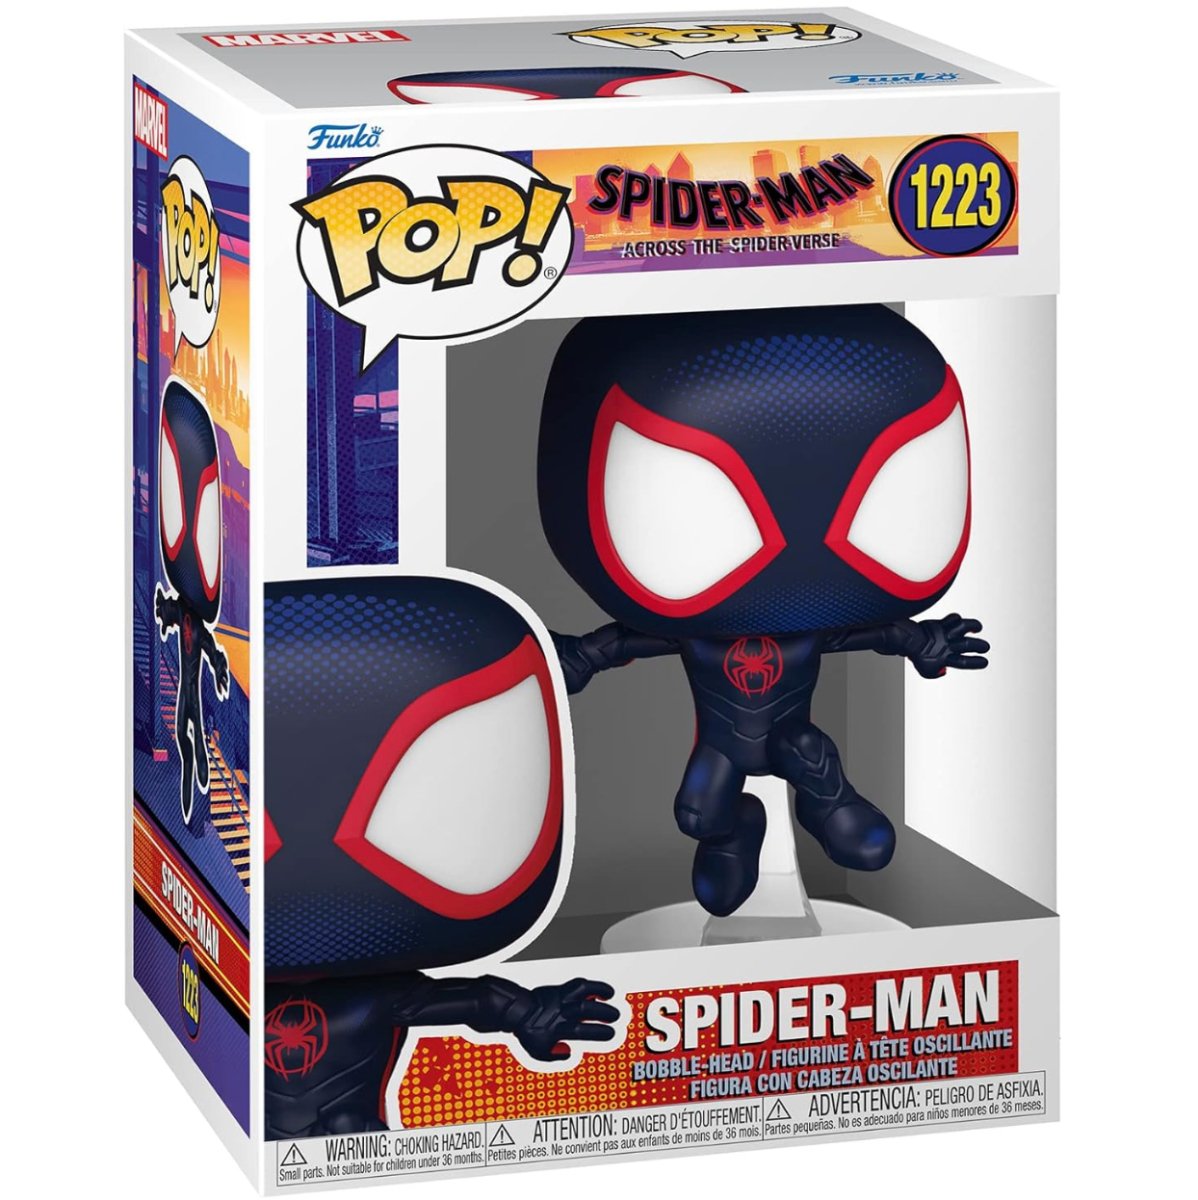 Spider-Man Across the Spider-Verse - Spider-Man [Miles Morales] #1223 - Funko Pop! Vinyl Marvel - Persona Toys